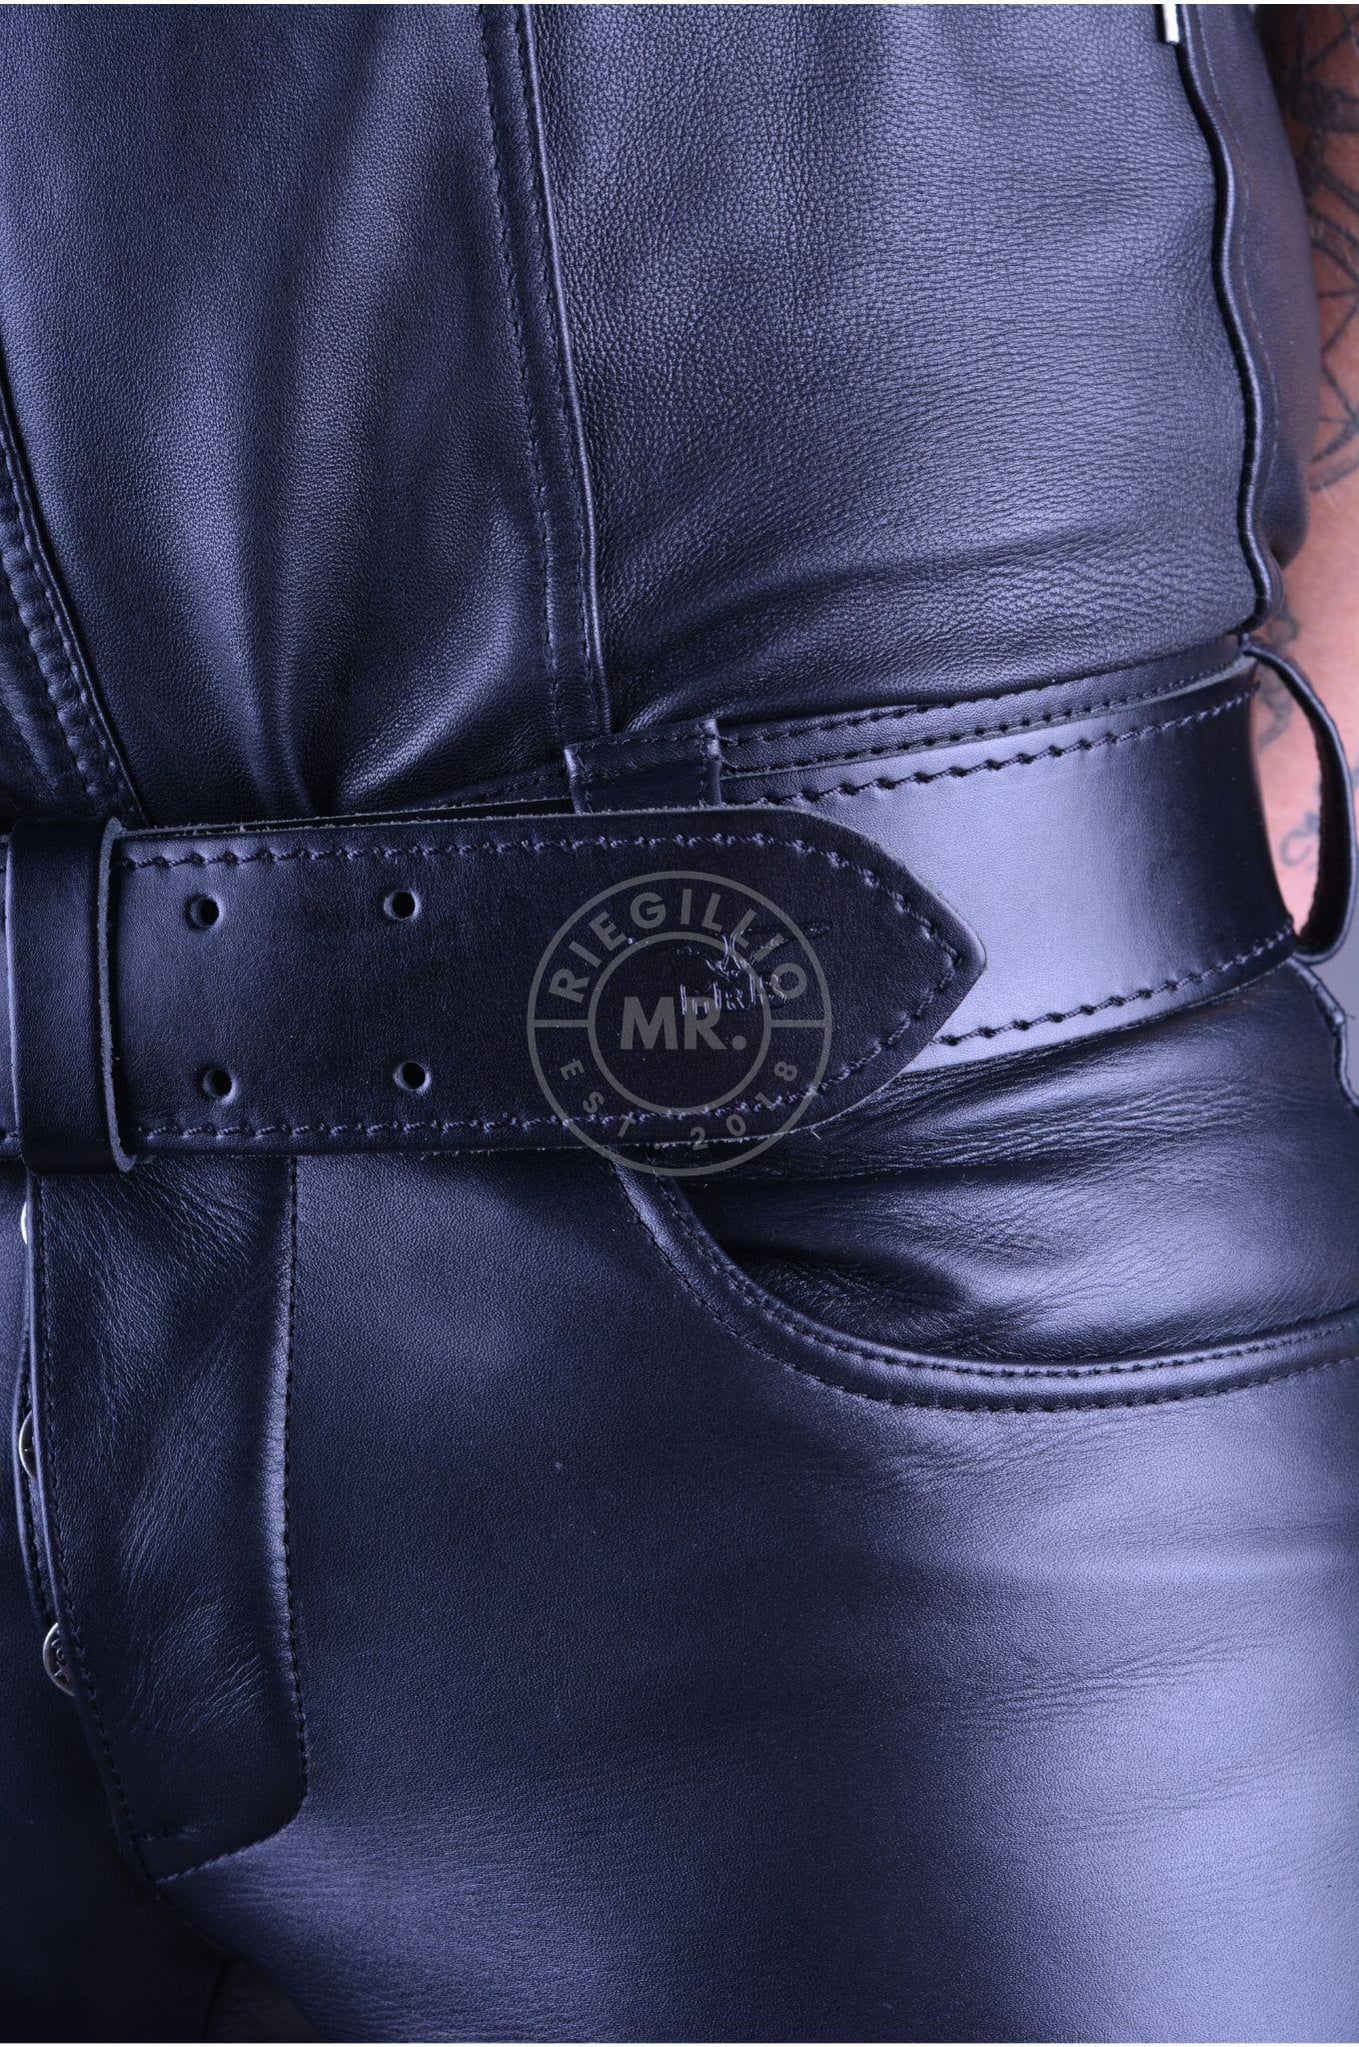 Mister B Leather Belt Stitched 5 cm - Black at MR. Riegillio